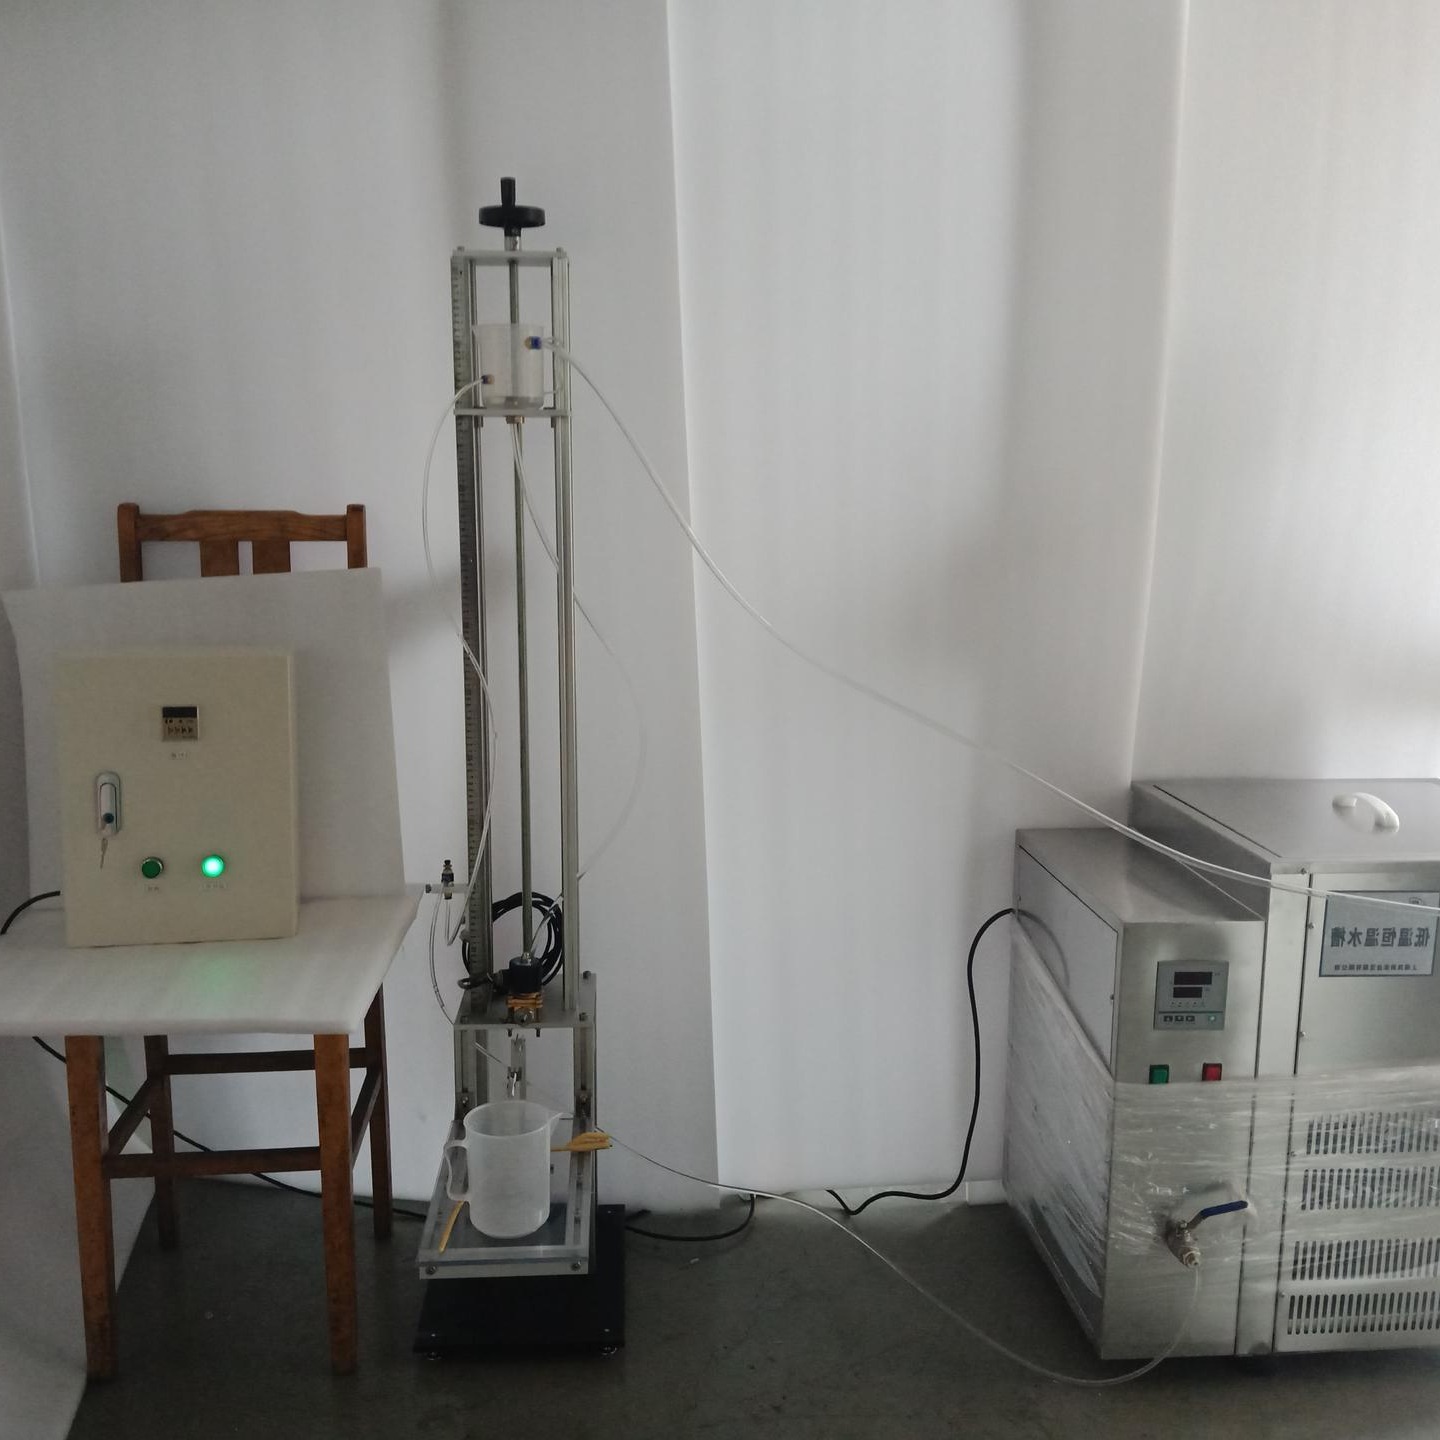 GB/T15812导尿管流量装置 适应各种导尿管检测 LL0325-A 远梓仪器